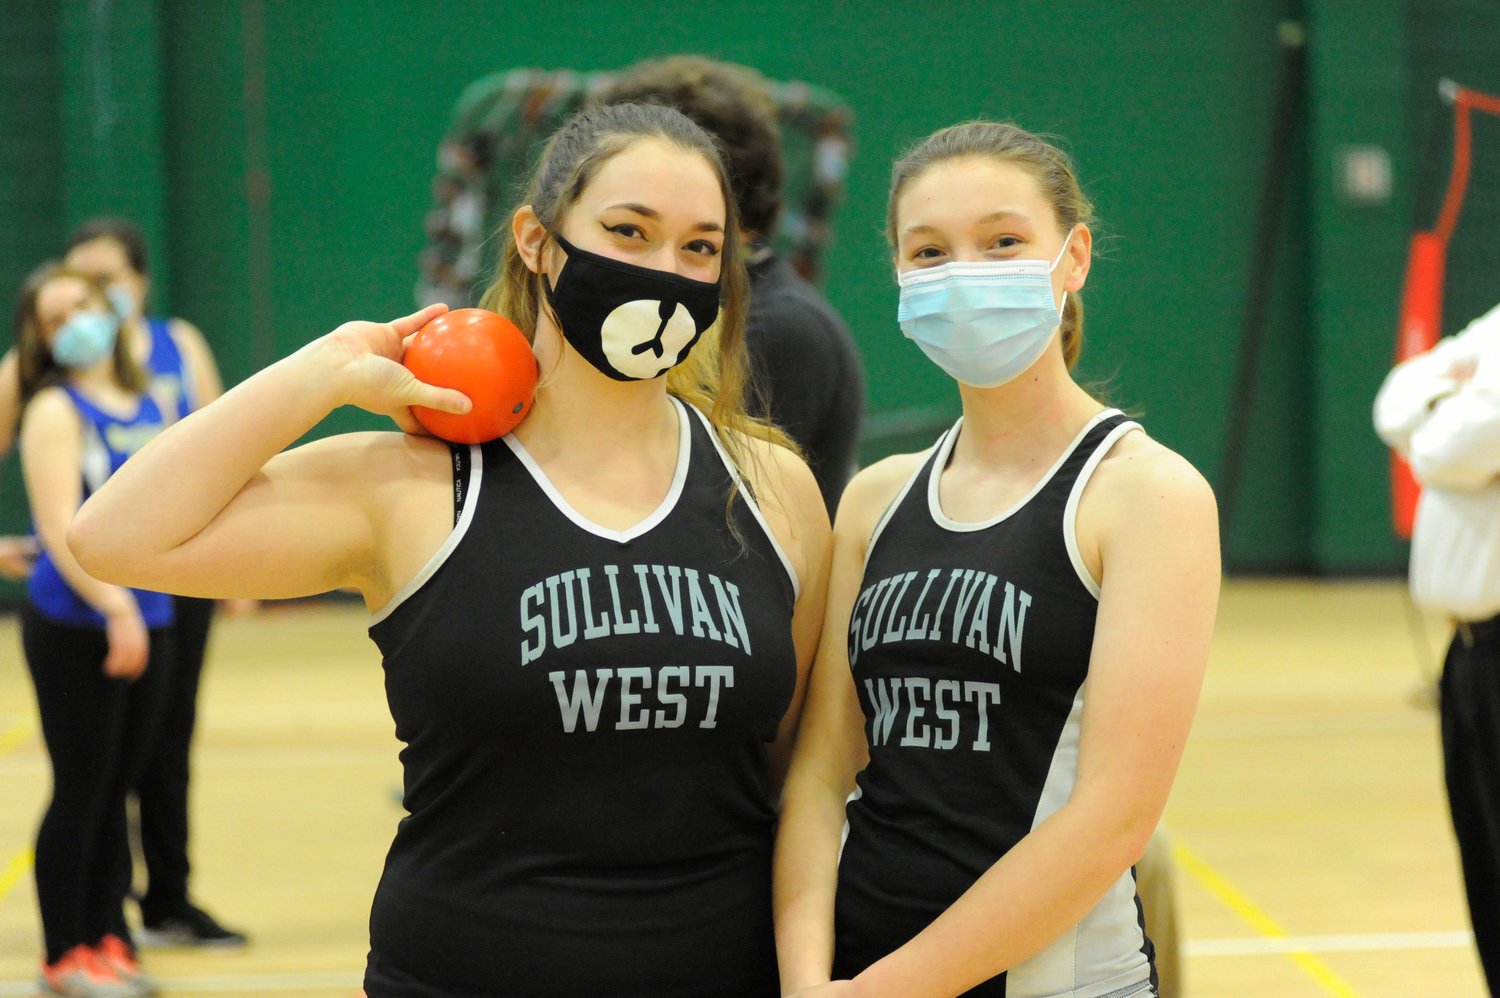 Sullivan West girls’ varsity shot-putters Kathryn Widman and Kaydence Everett. Widman placed first in the girls’ varsity event.